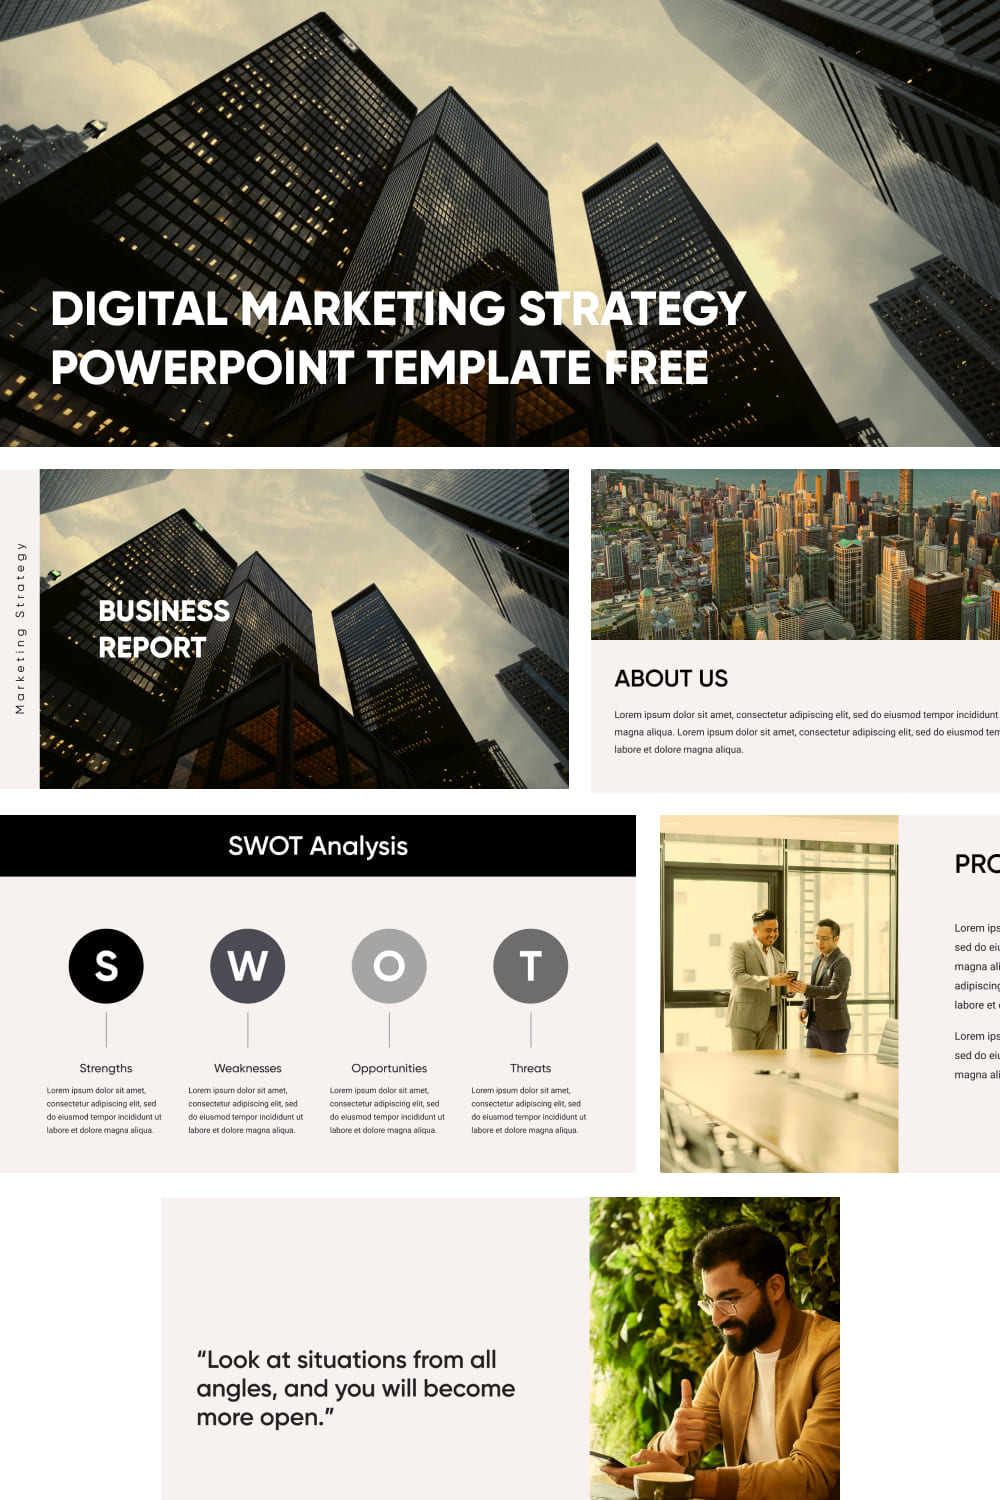 Digital Marketing Strategy Powerpoint Template Free Pinterest.